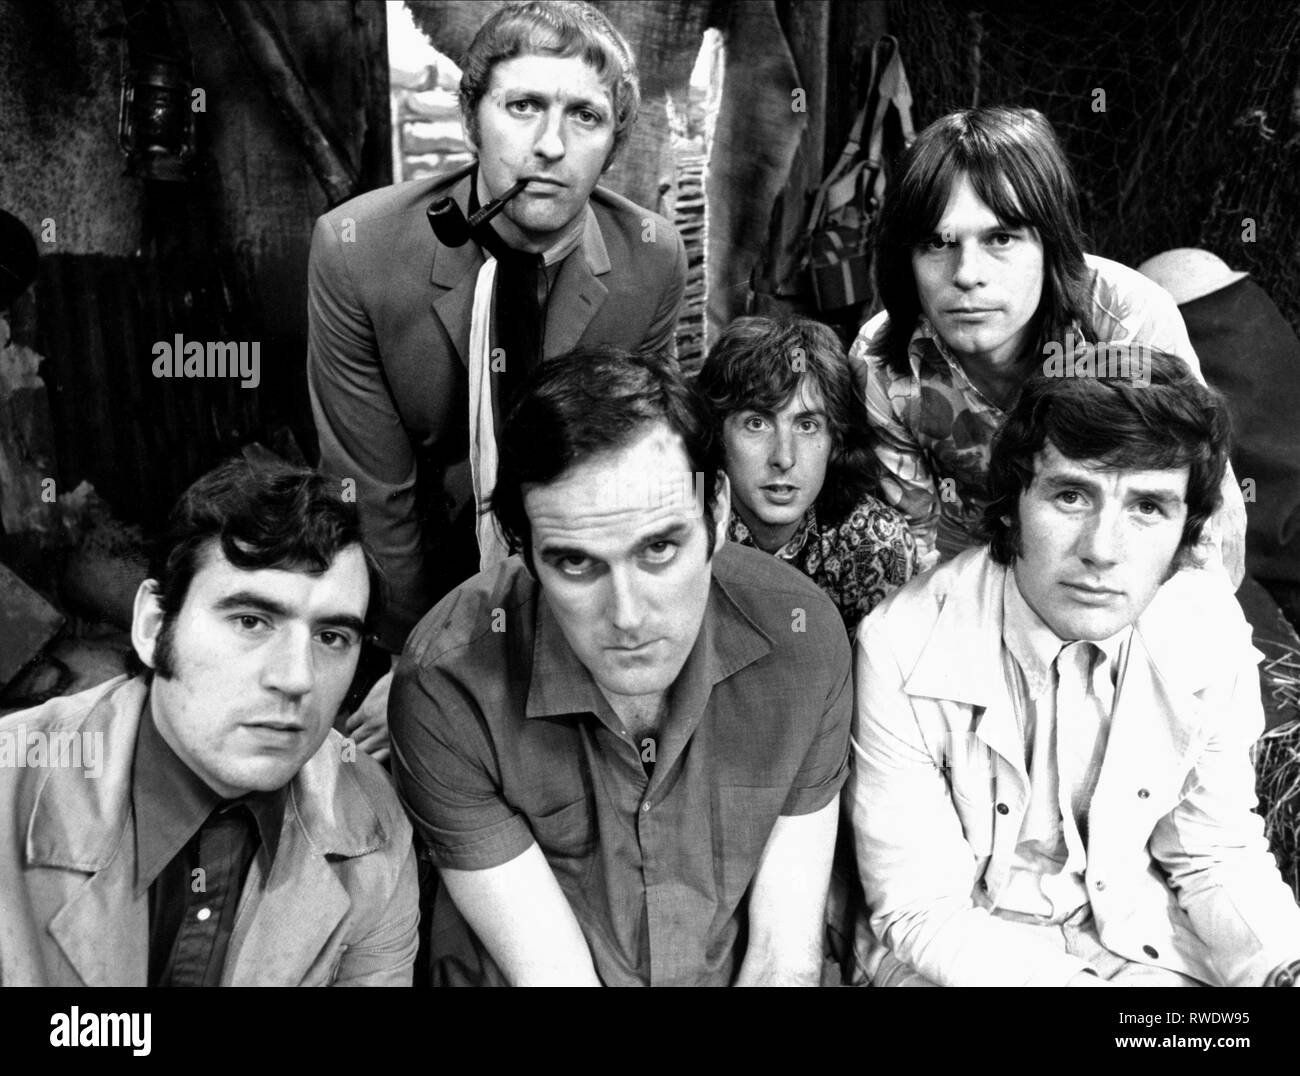 CHAPMAN,IDLE,GILLIAM,JONES,CLEESE,PALIN, MONTY PYTHON'S FLYING CIRCUS, 1969 Stock Photo